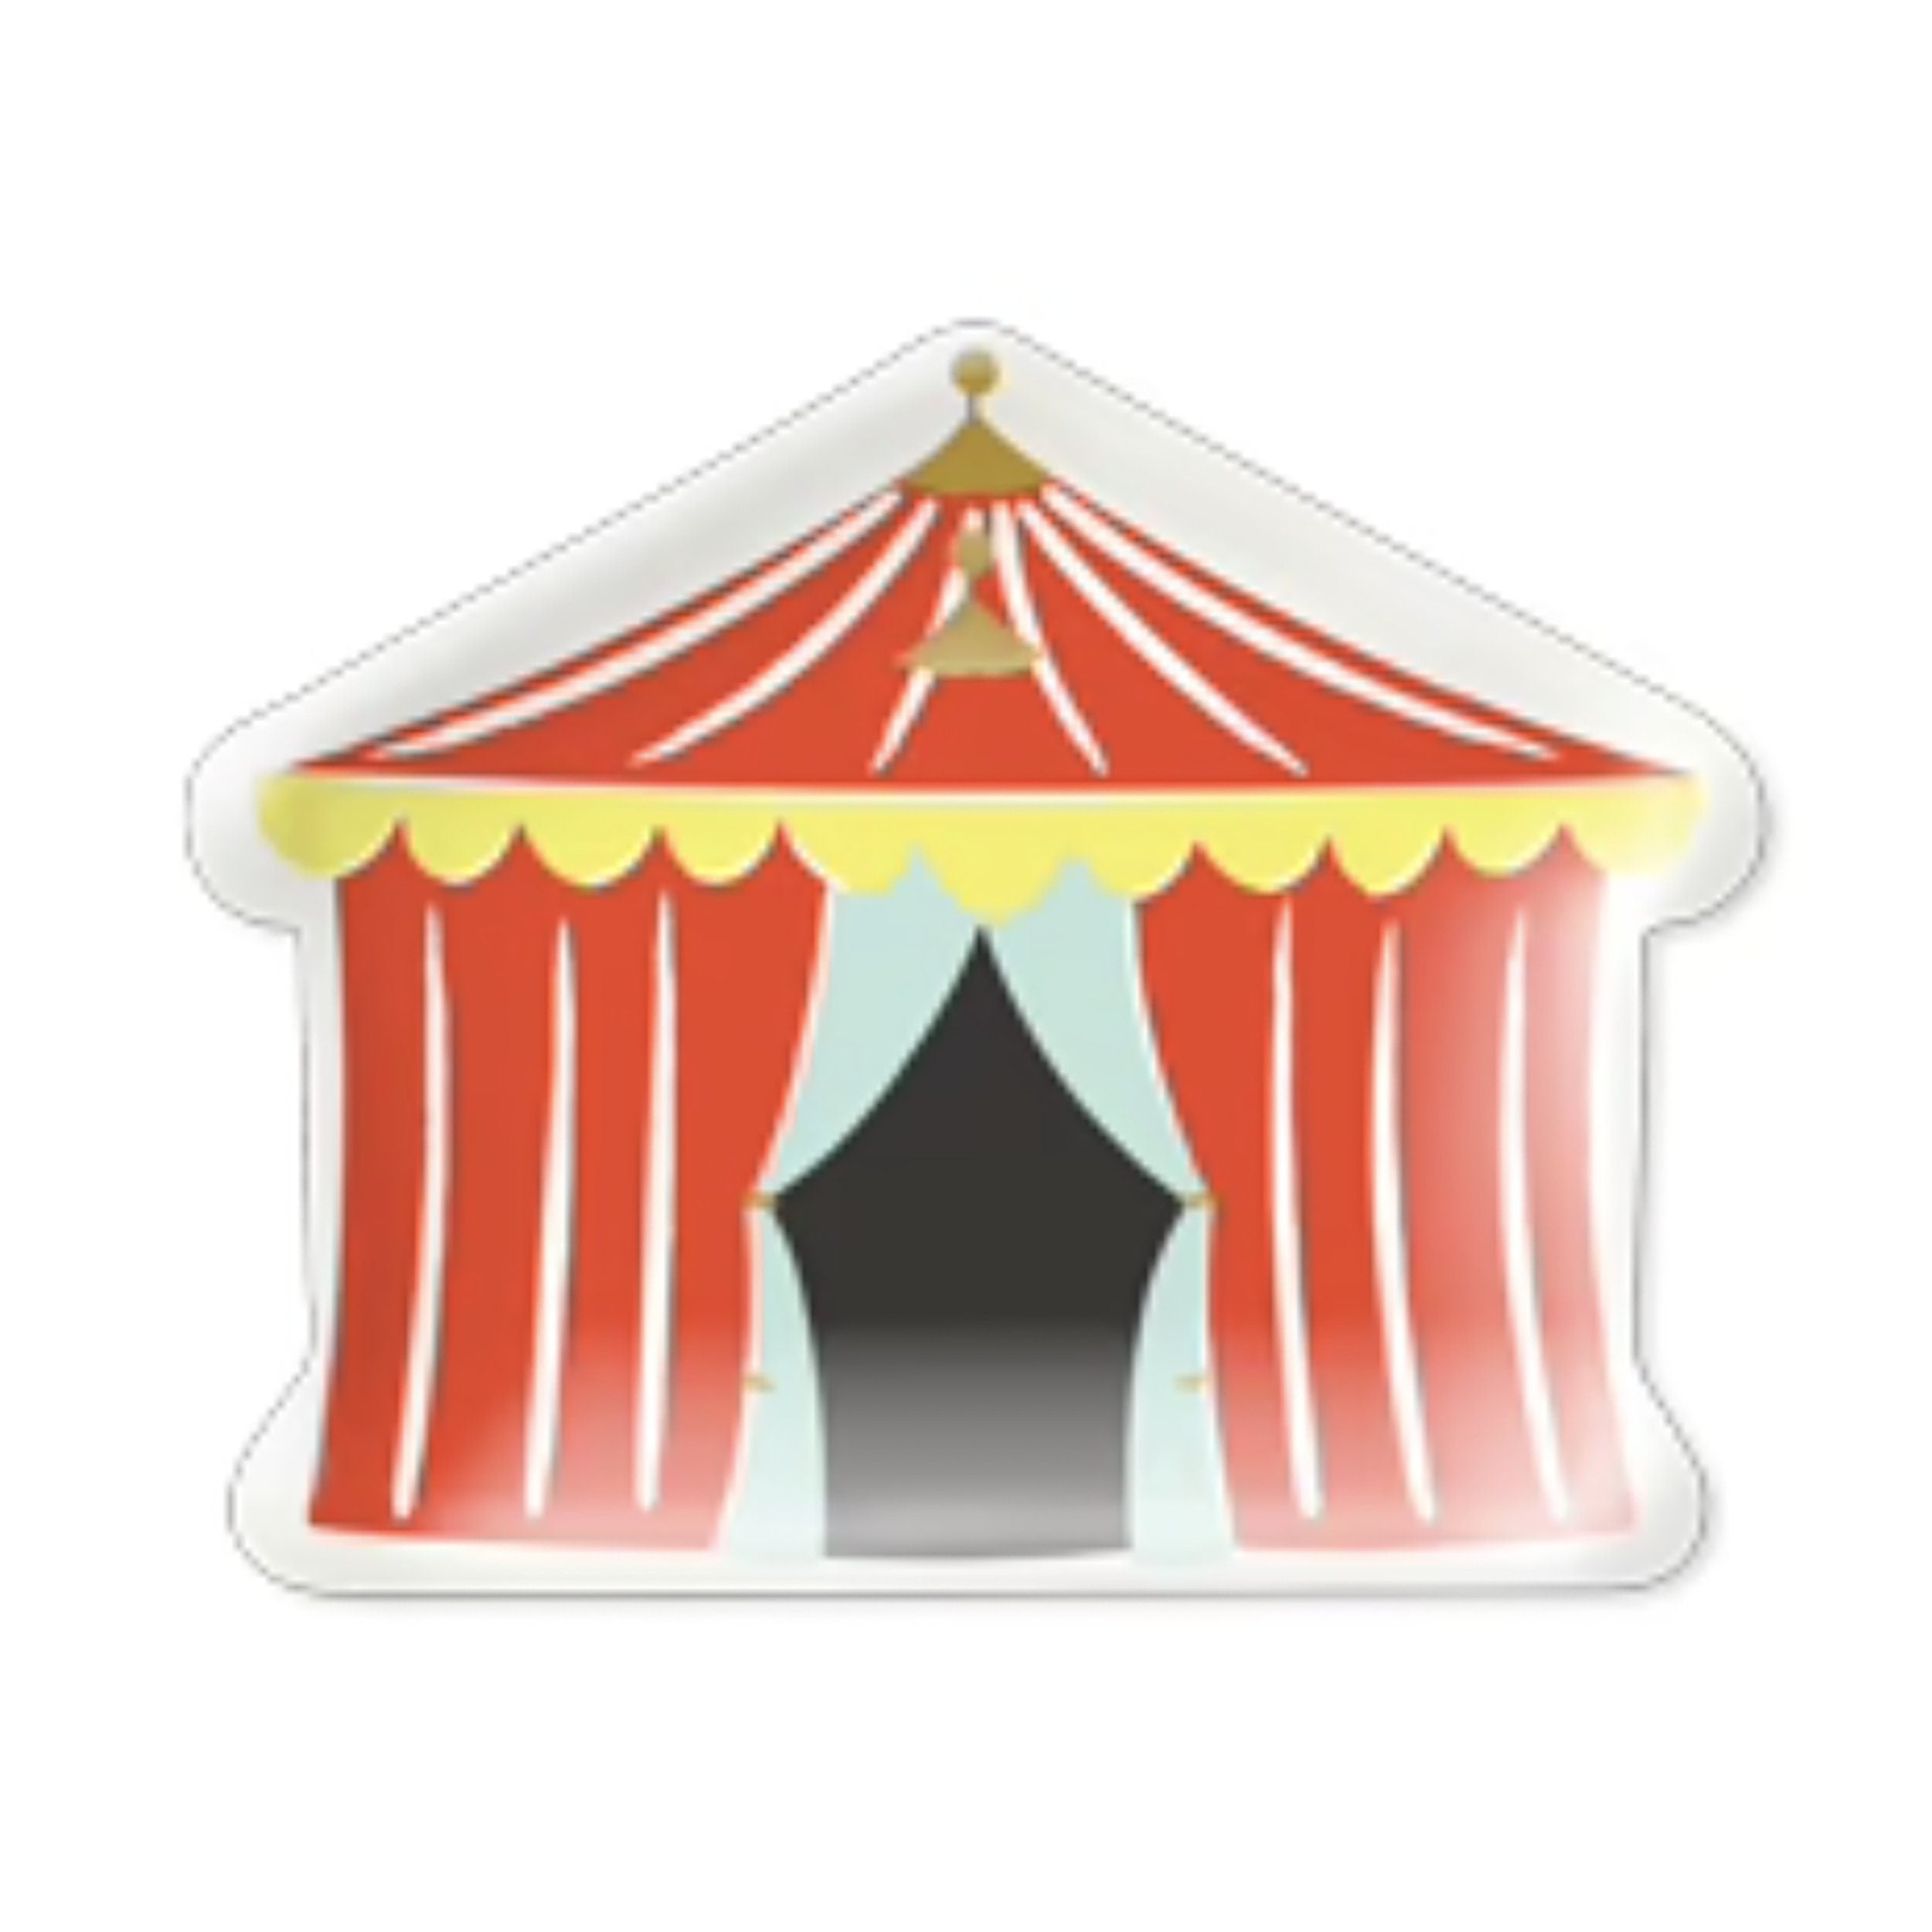 Circus Plates | Circus Baby Shower - Circus Birthday Party - Carnival Theme Party - Carnival Birthday Party - Circus Paper Plates